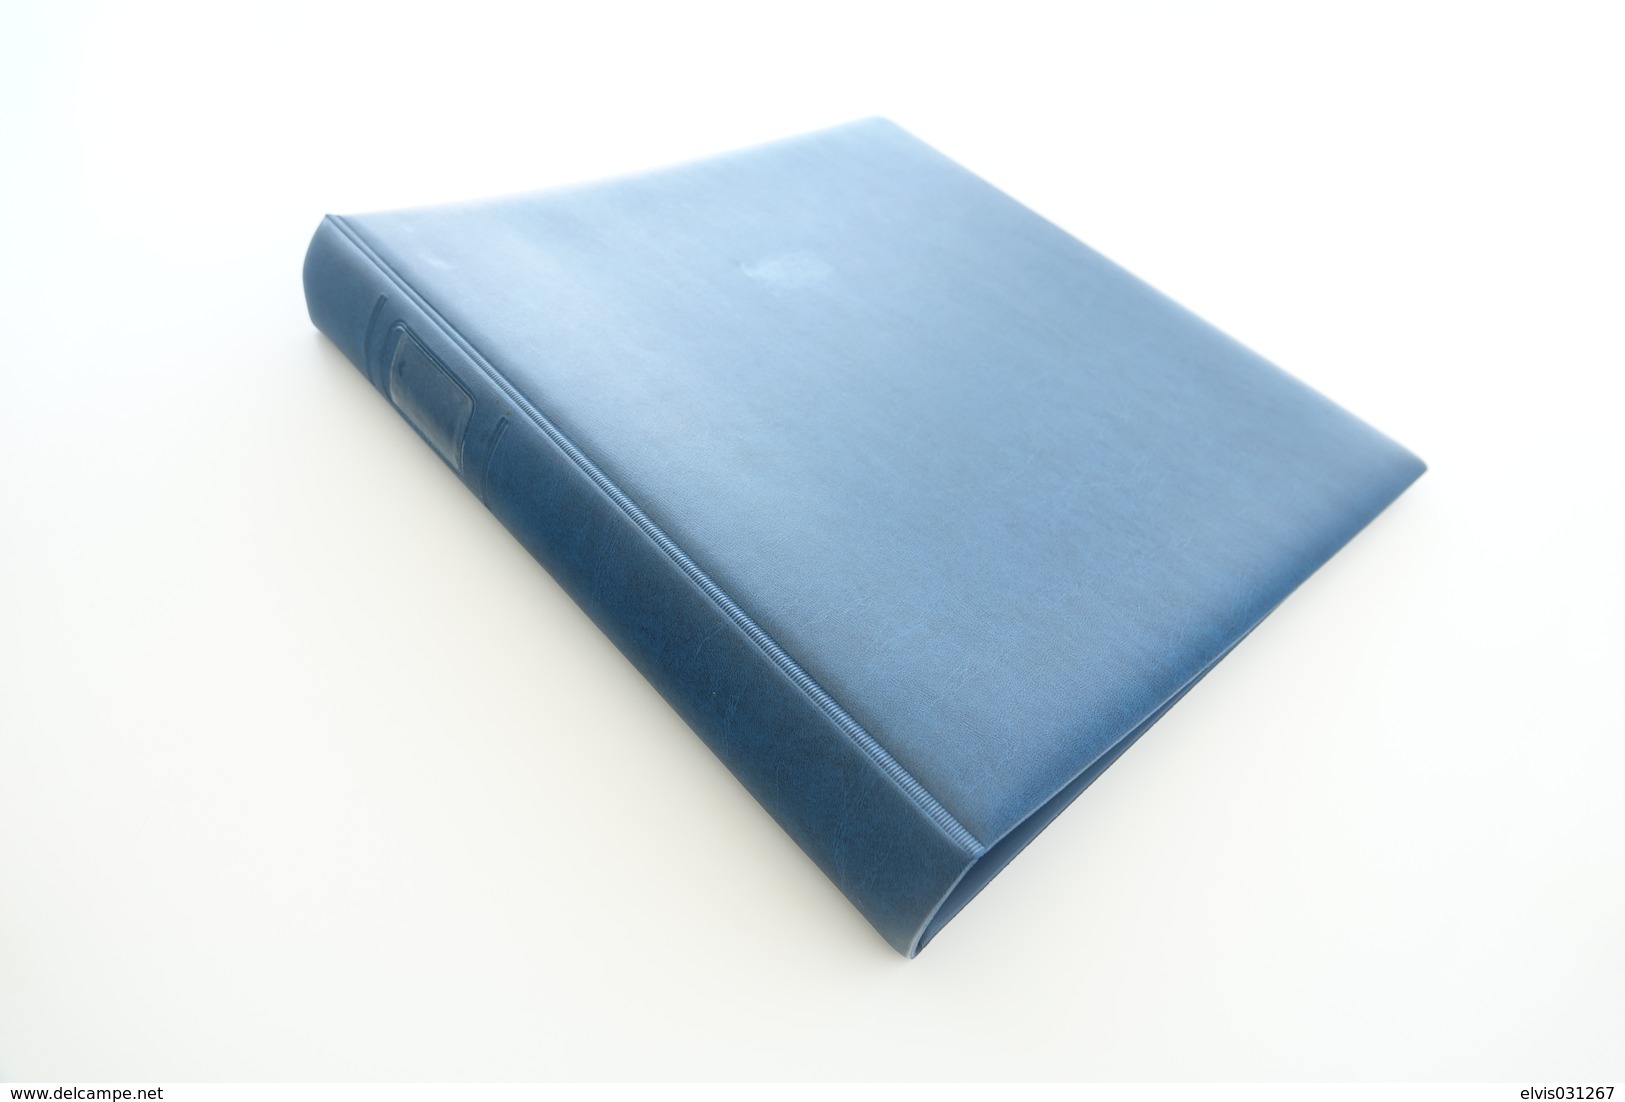 Israel Album - Lindner Album, Blue, 18 Rings, Format 5x30x32cm - Large Format, White Pages